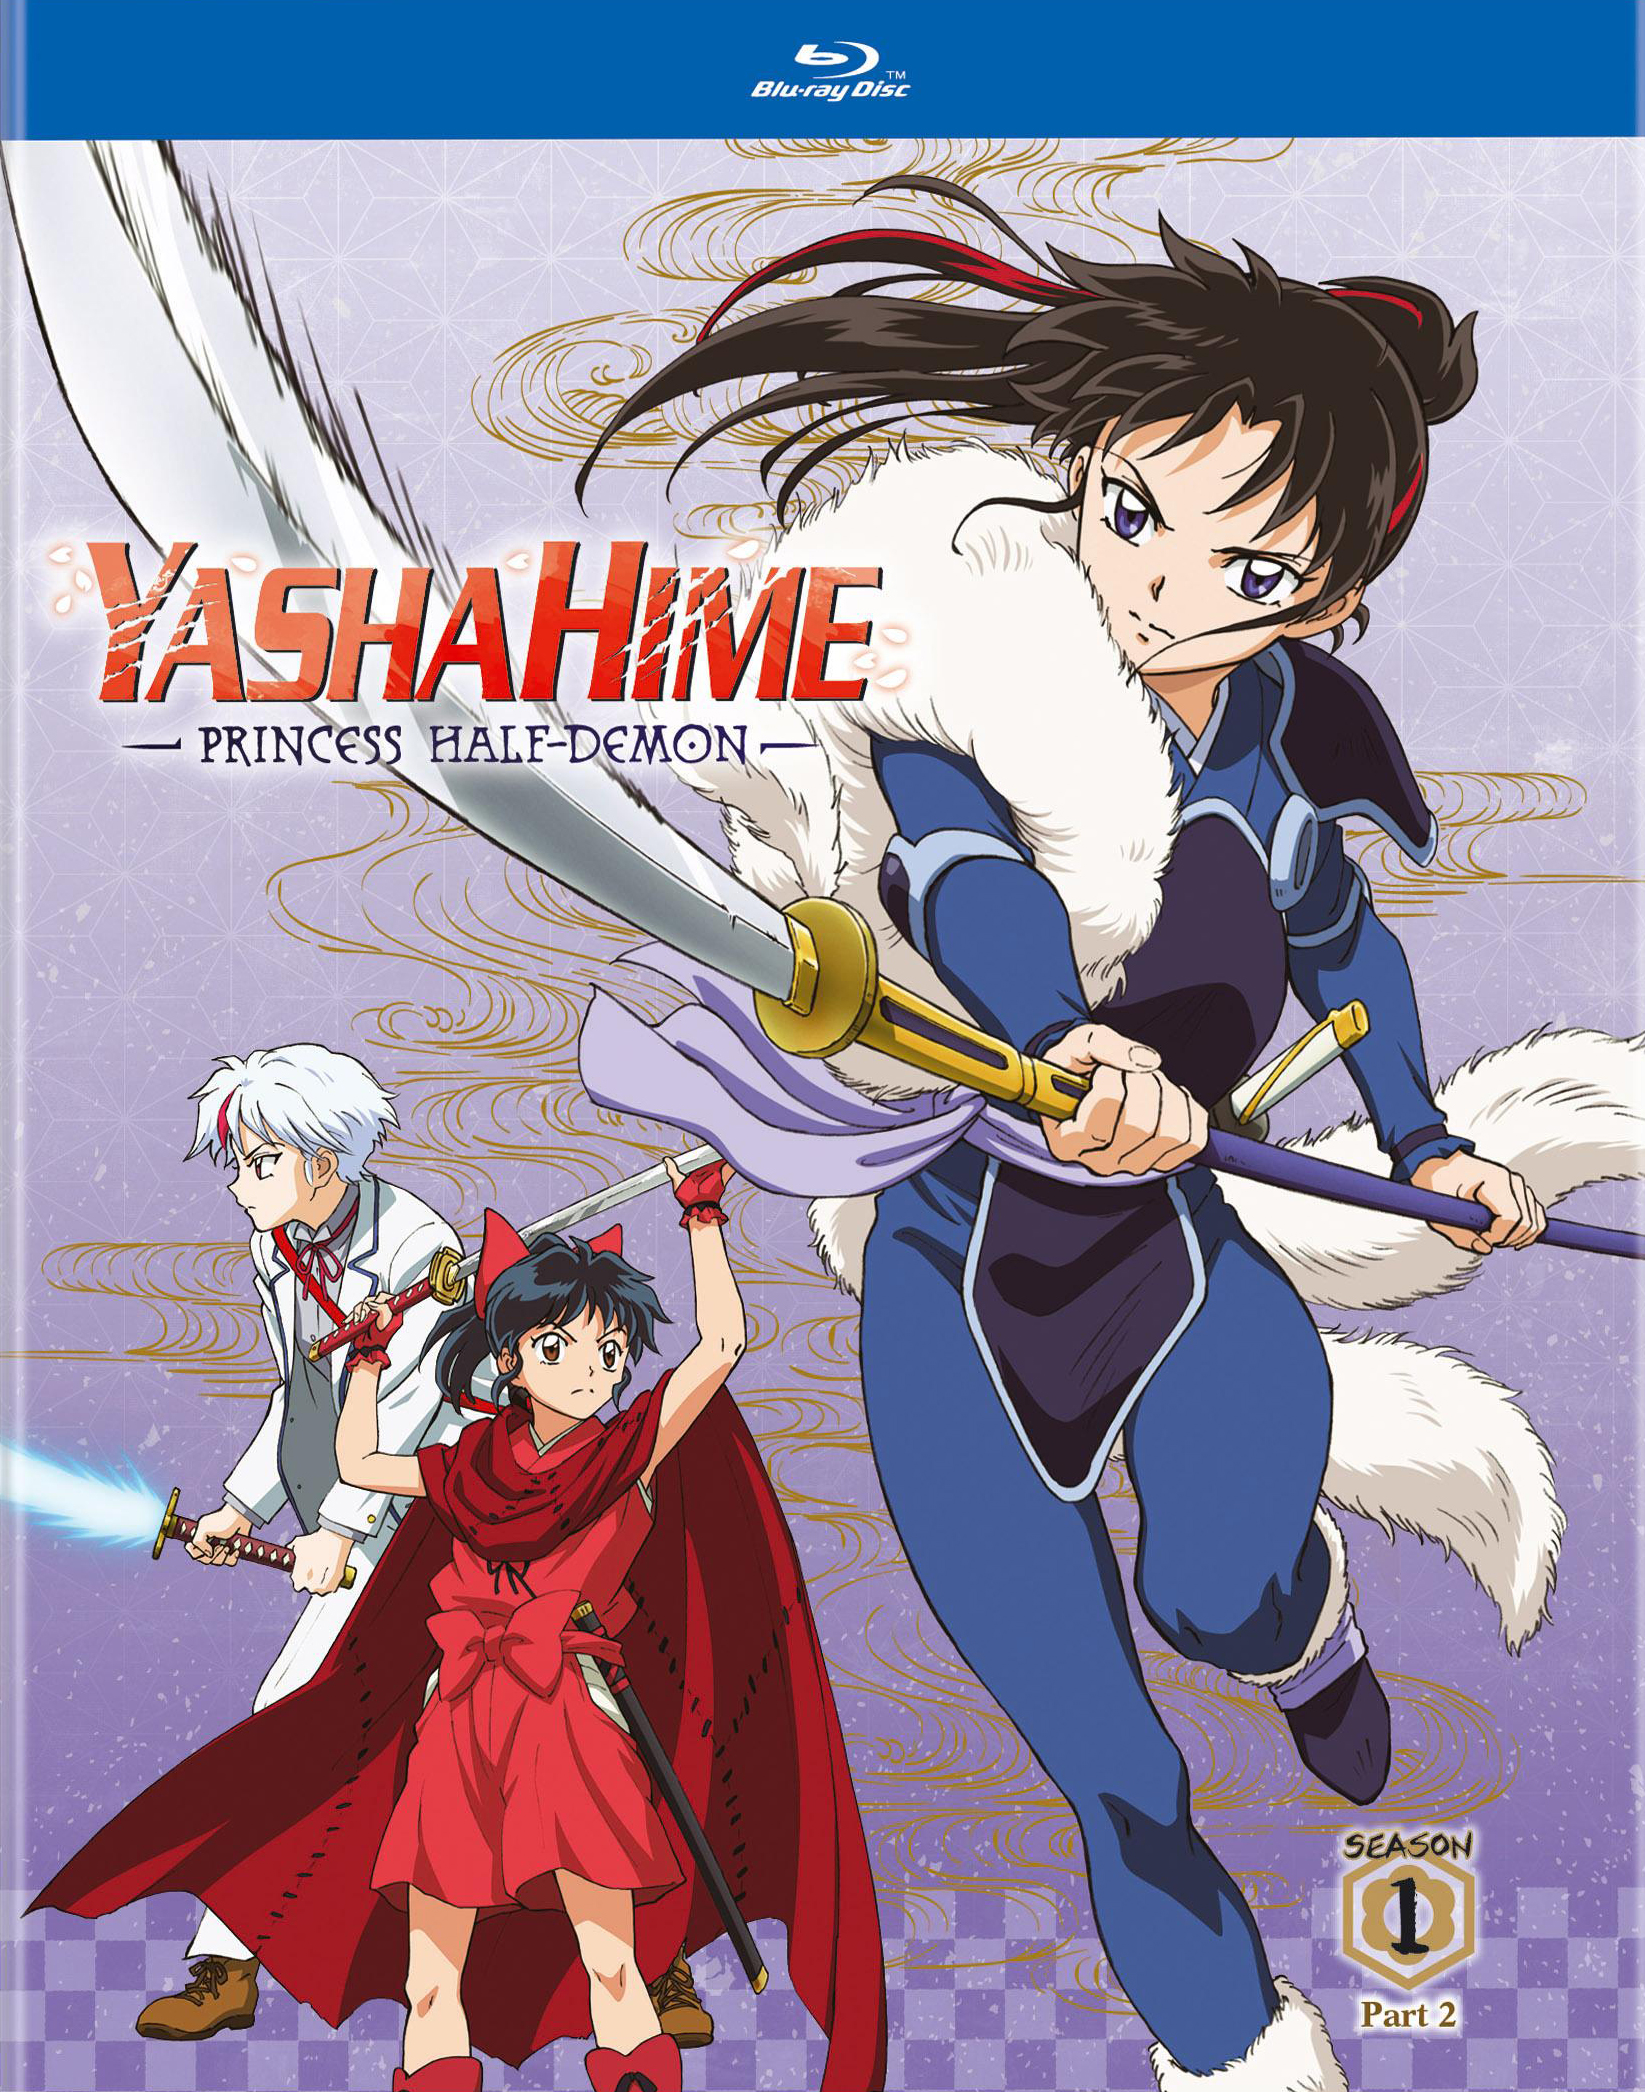 Yashahime Season 3 release date: Yashahime: Princess Half-Demon